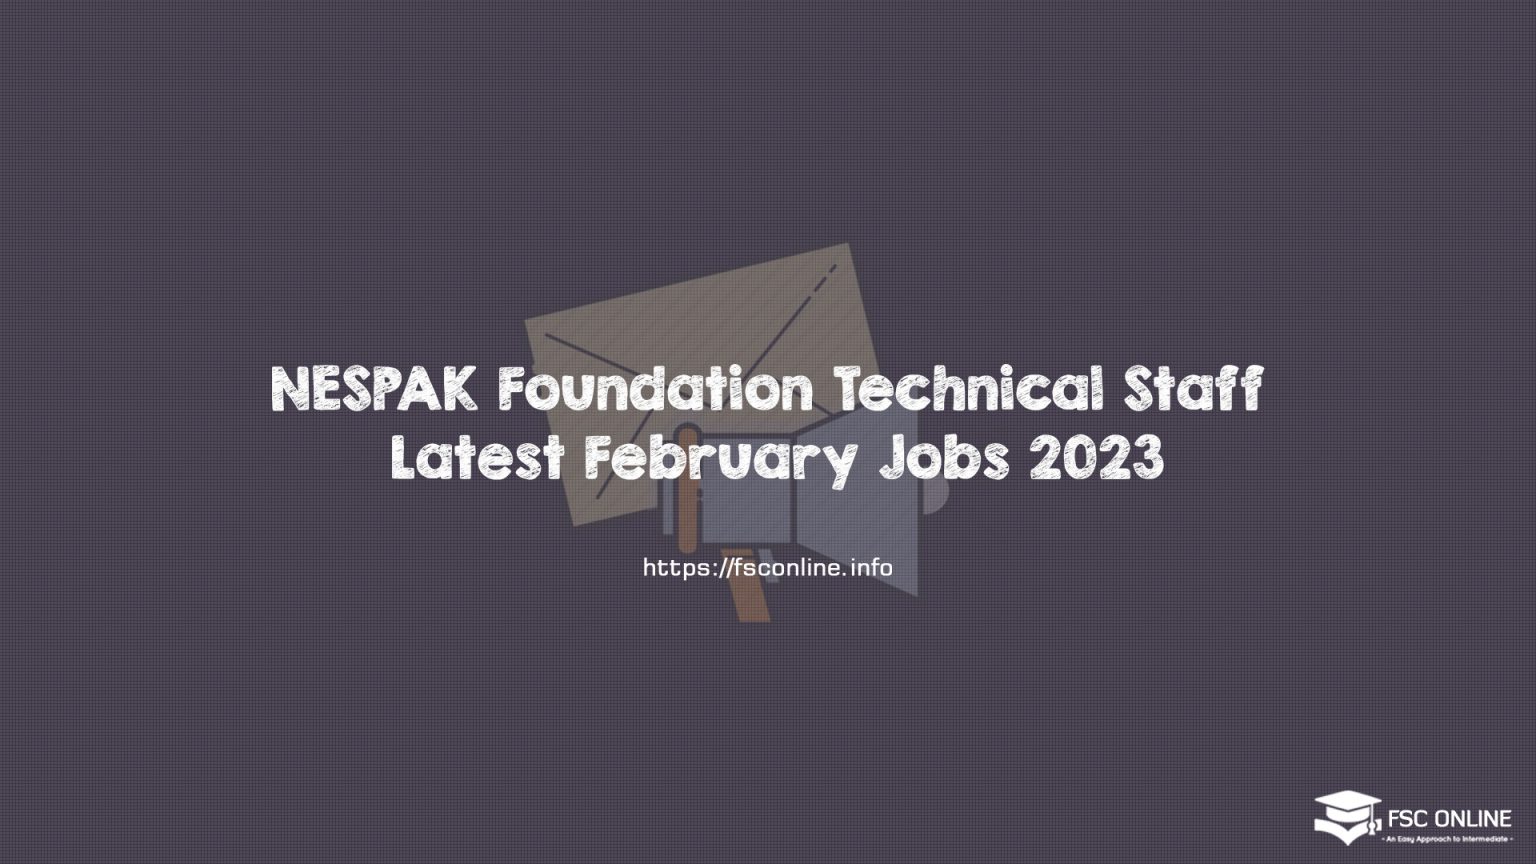 NESPAK Foundation Technical Staff Jobs 2023